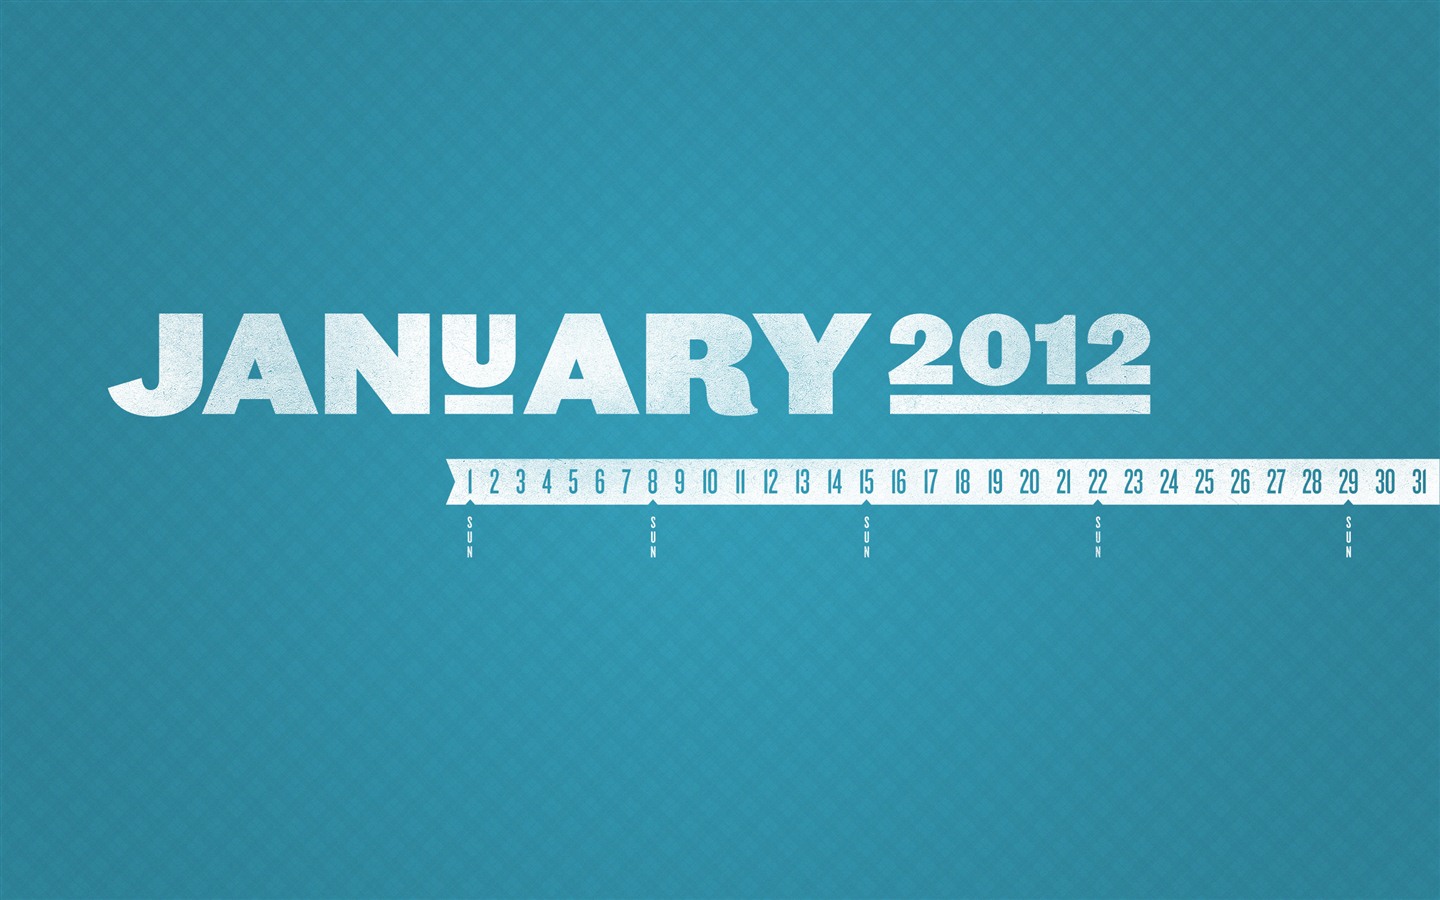 January 2012 Calendar Wallpapers #19 - 1440x900